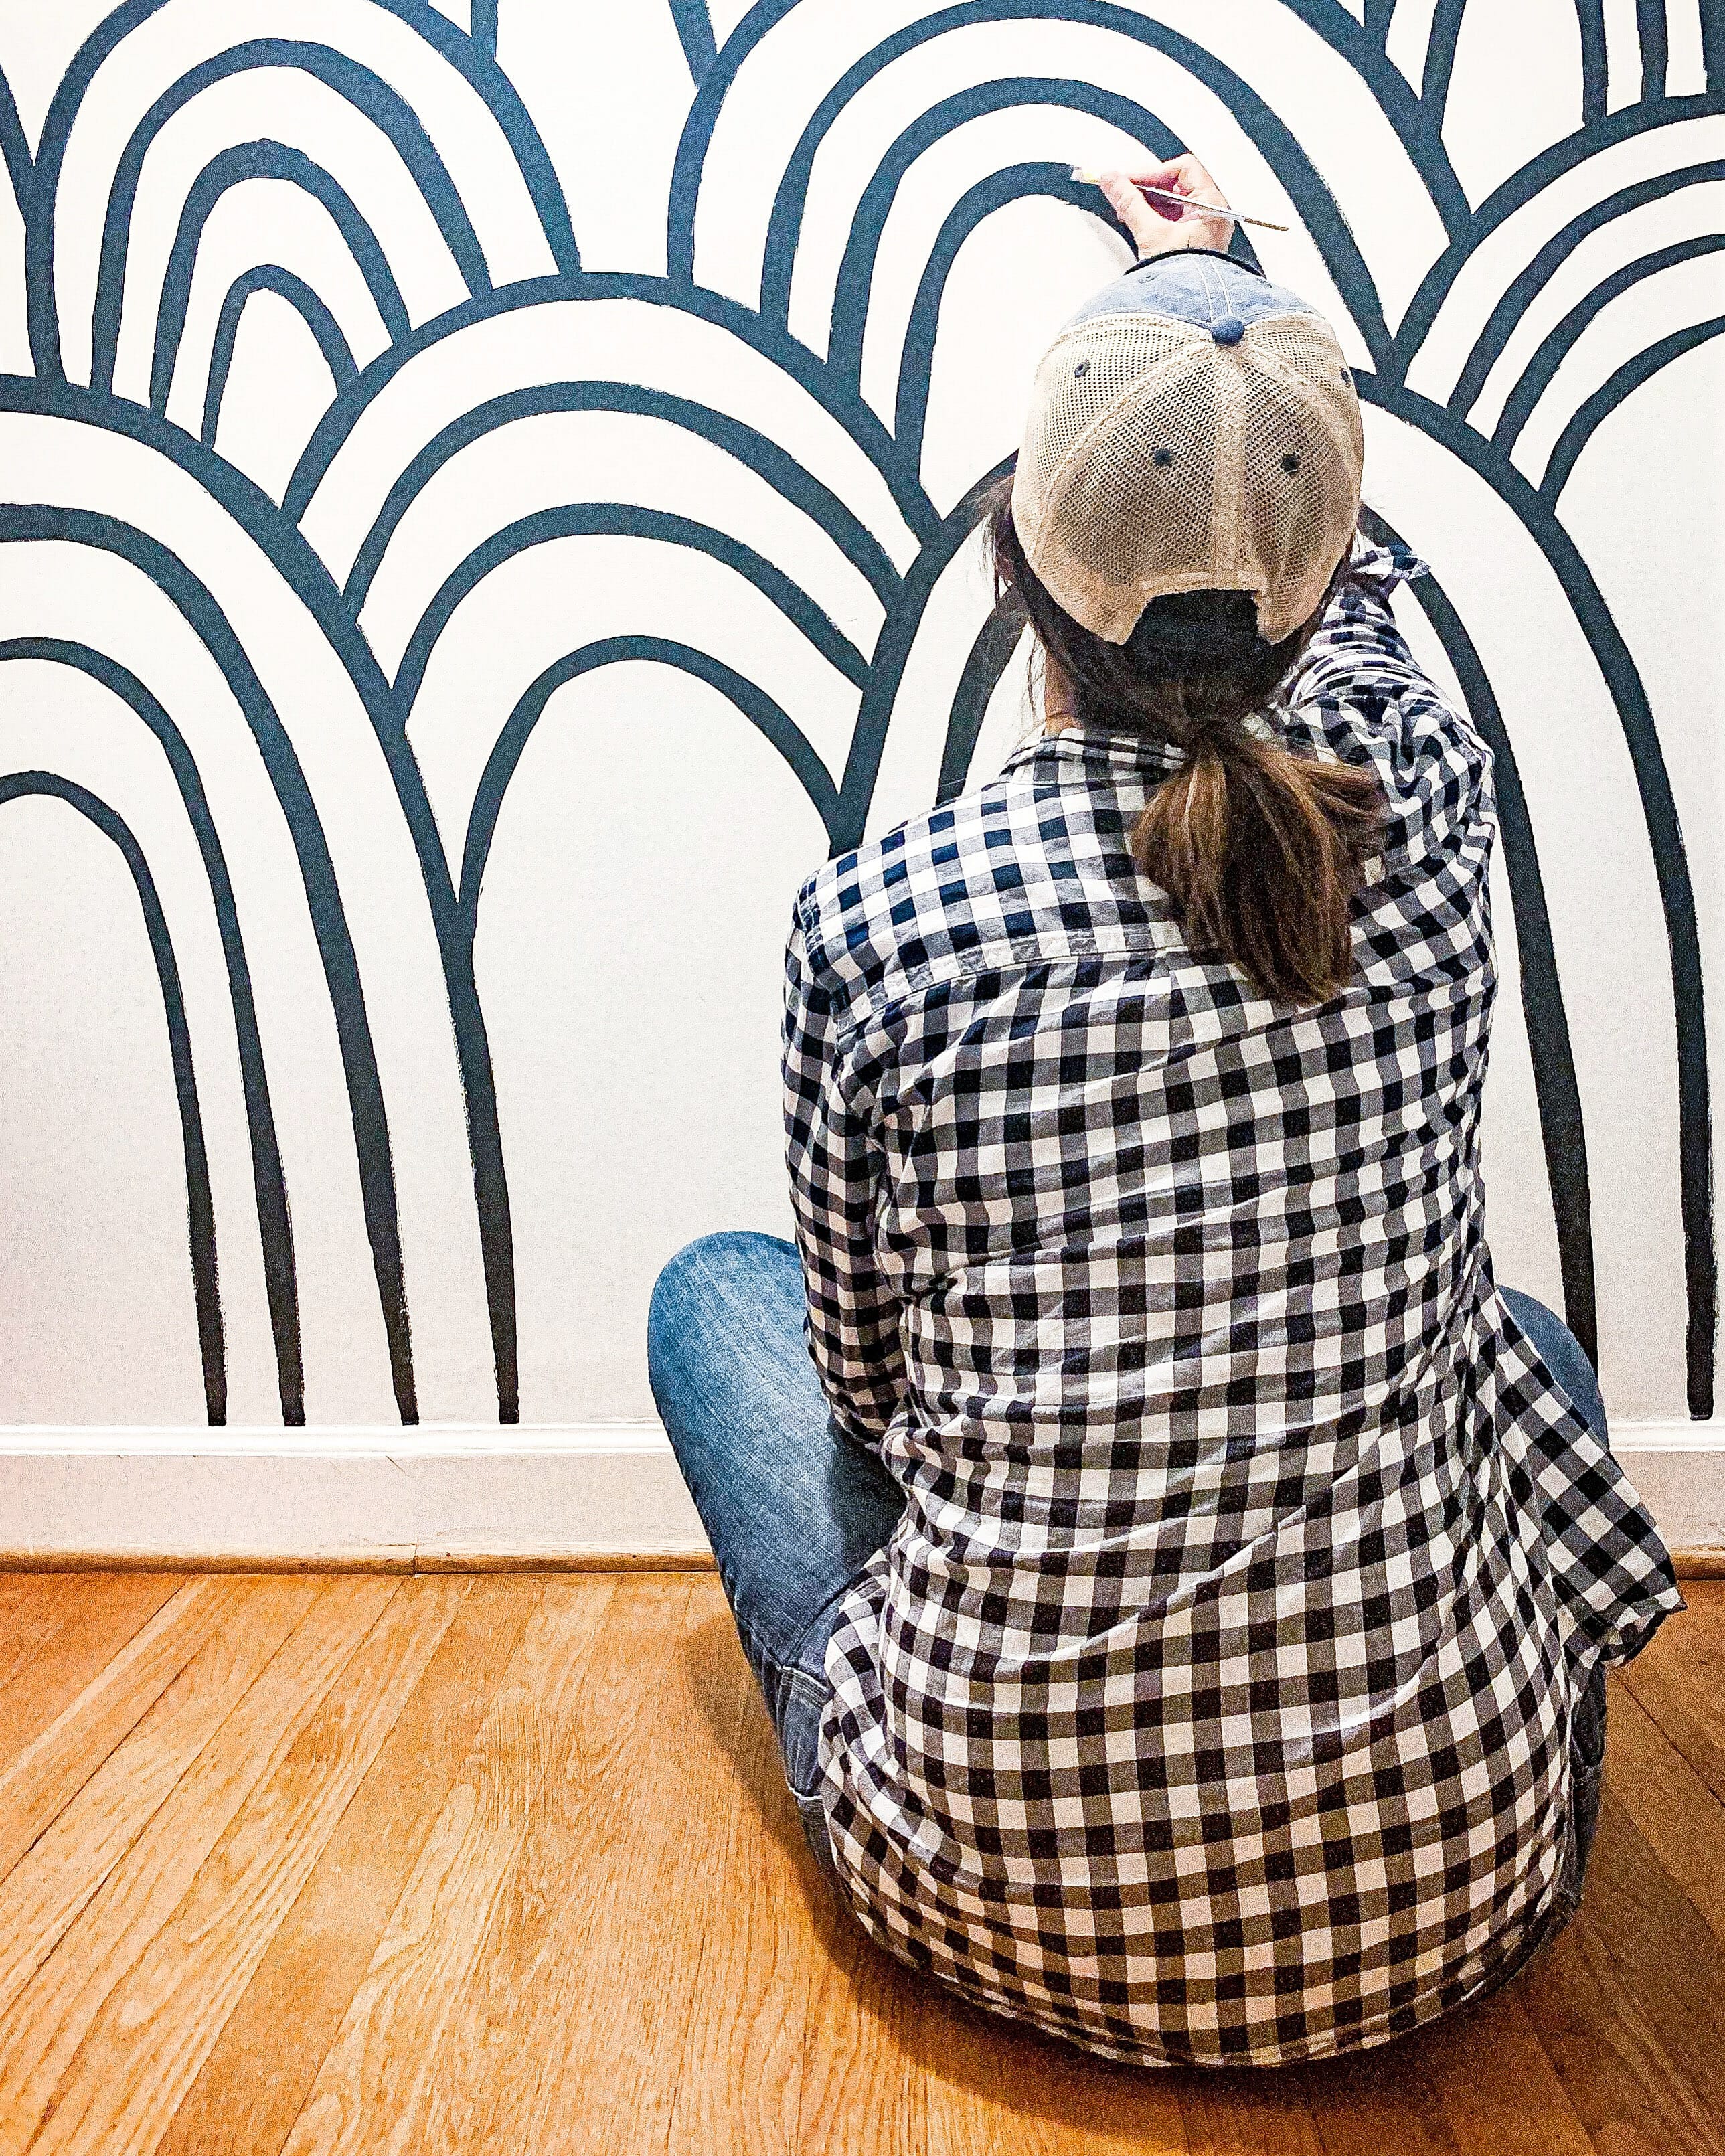 DIY Wood Striped Wall - Transform That Blank Wall In A Day!